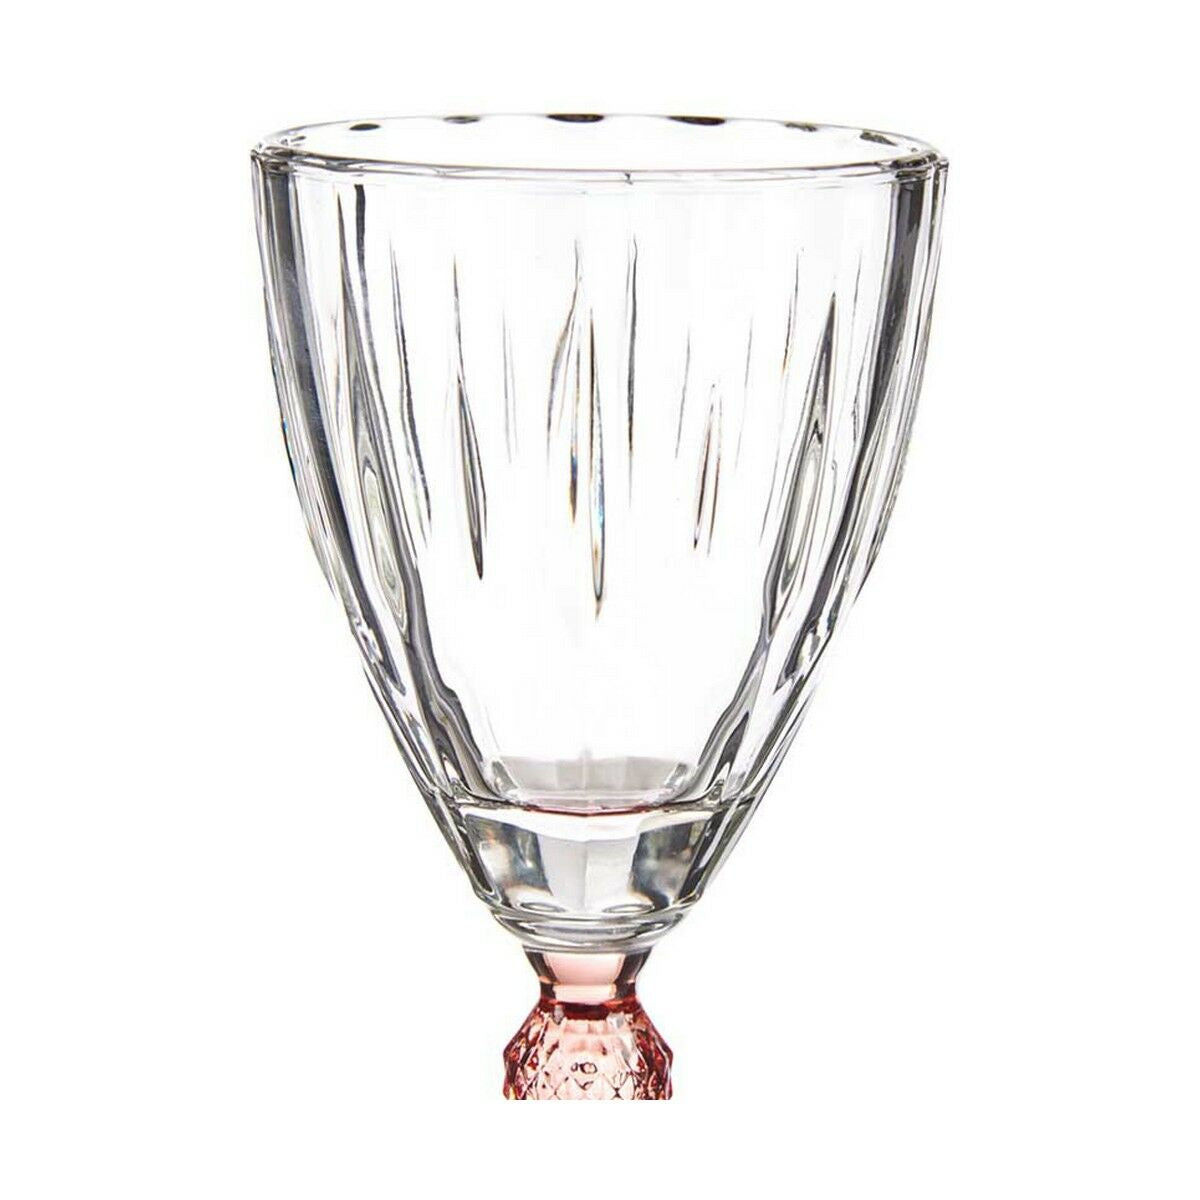 Copa de vino Exotic Cristal Salmón 275 ml